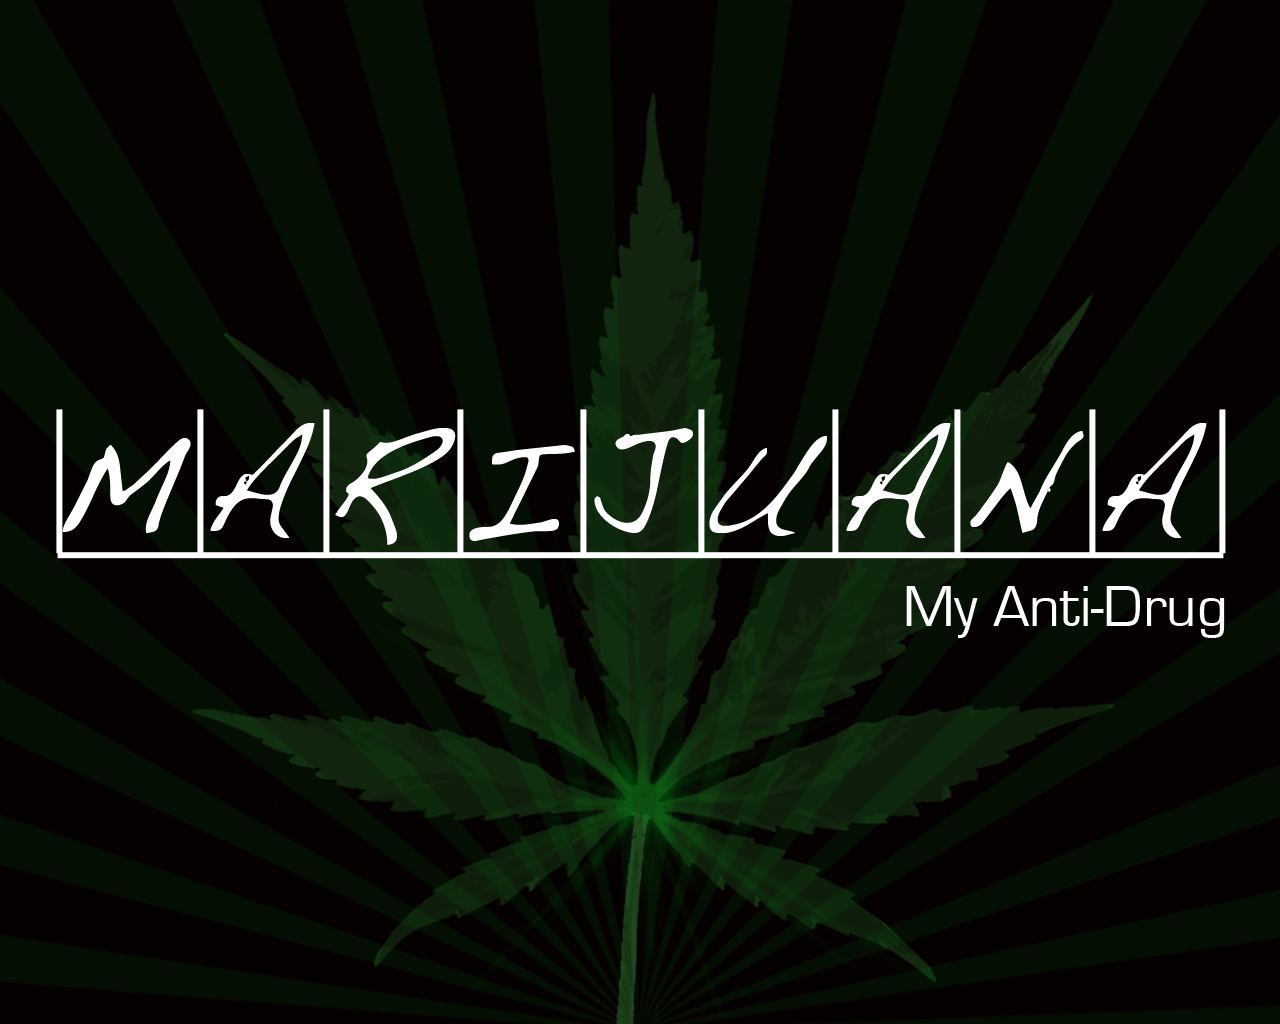 Marijuana is my anti-drug